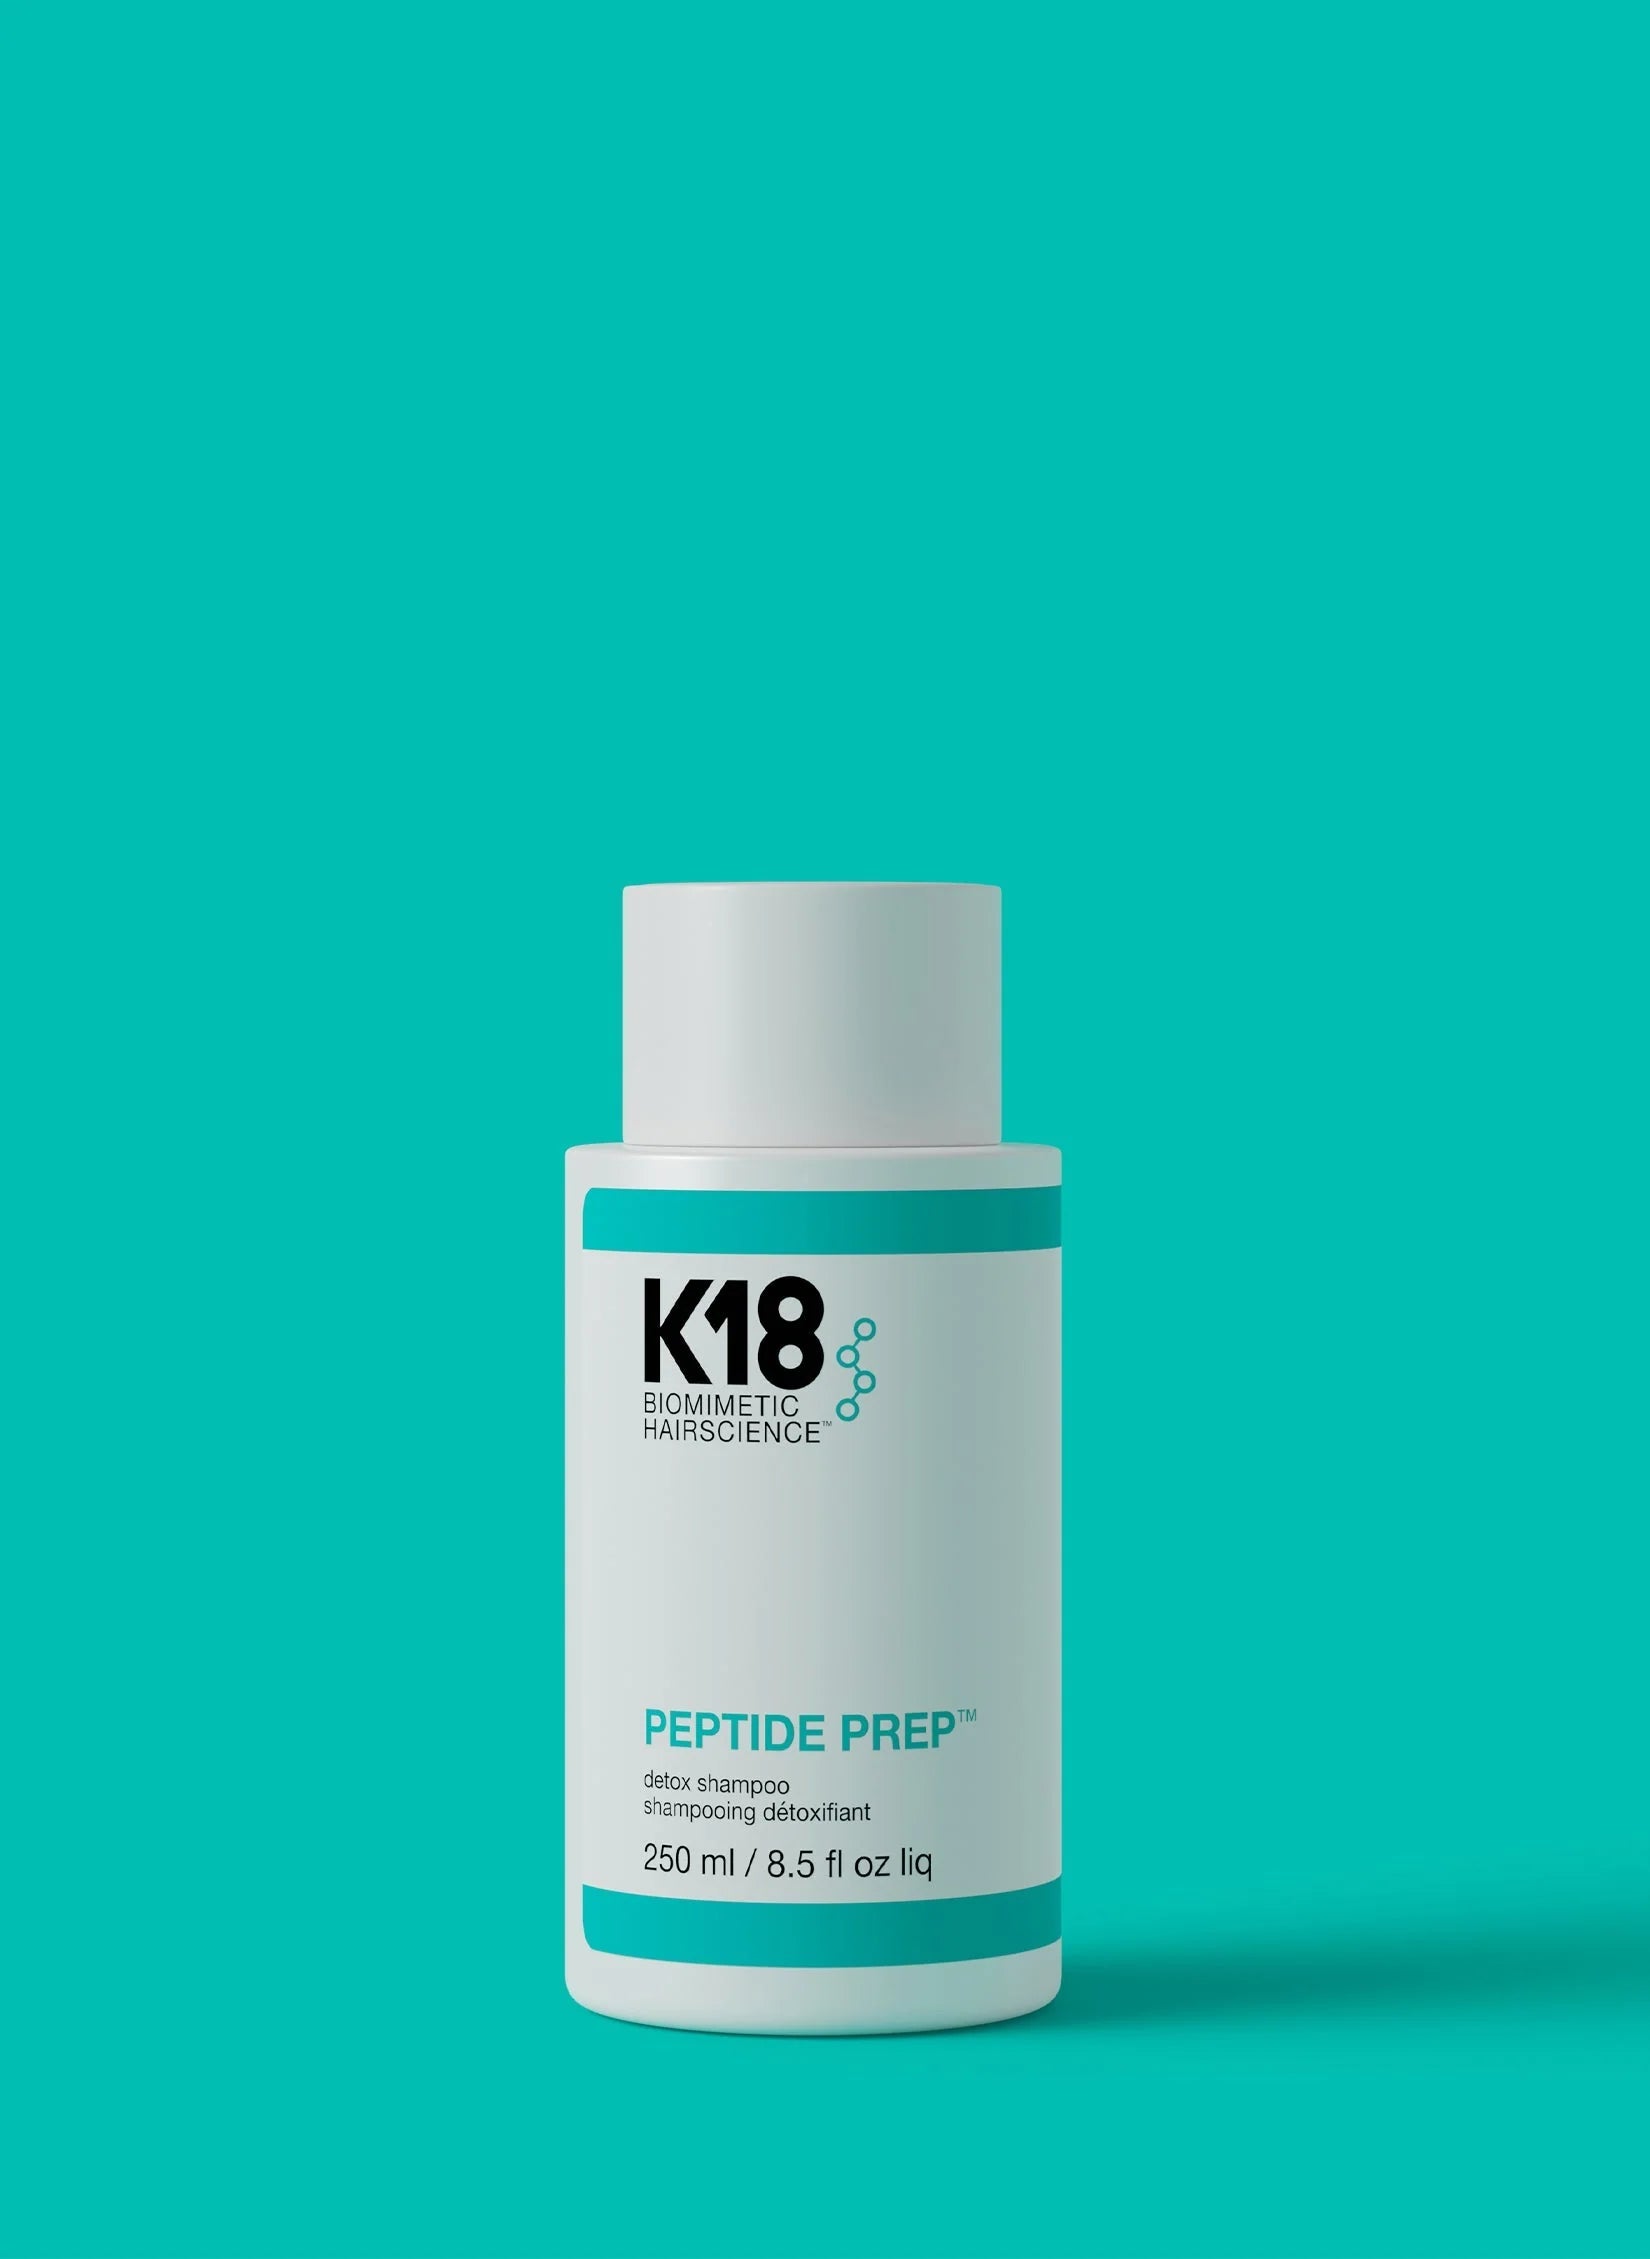 K18 PEPTIDE PREP™ detox shampoo 8.5 oz